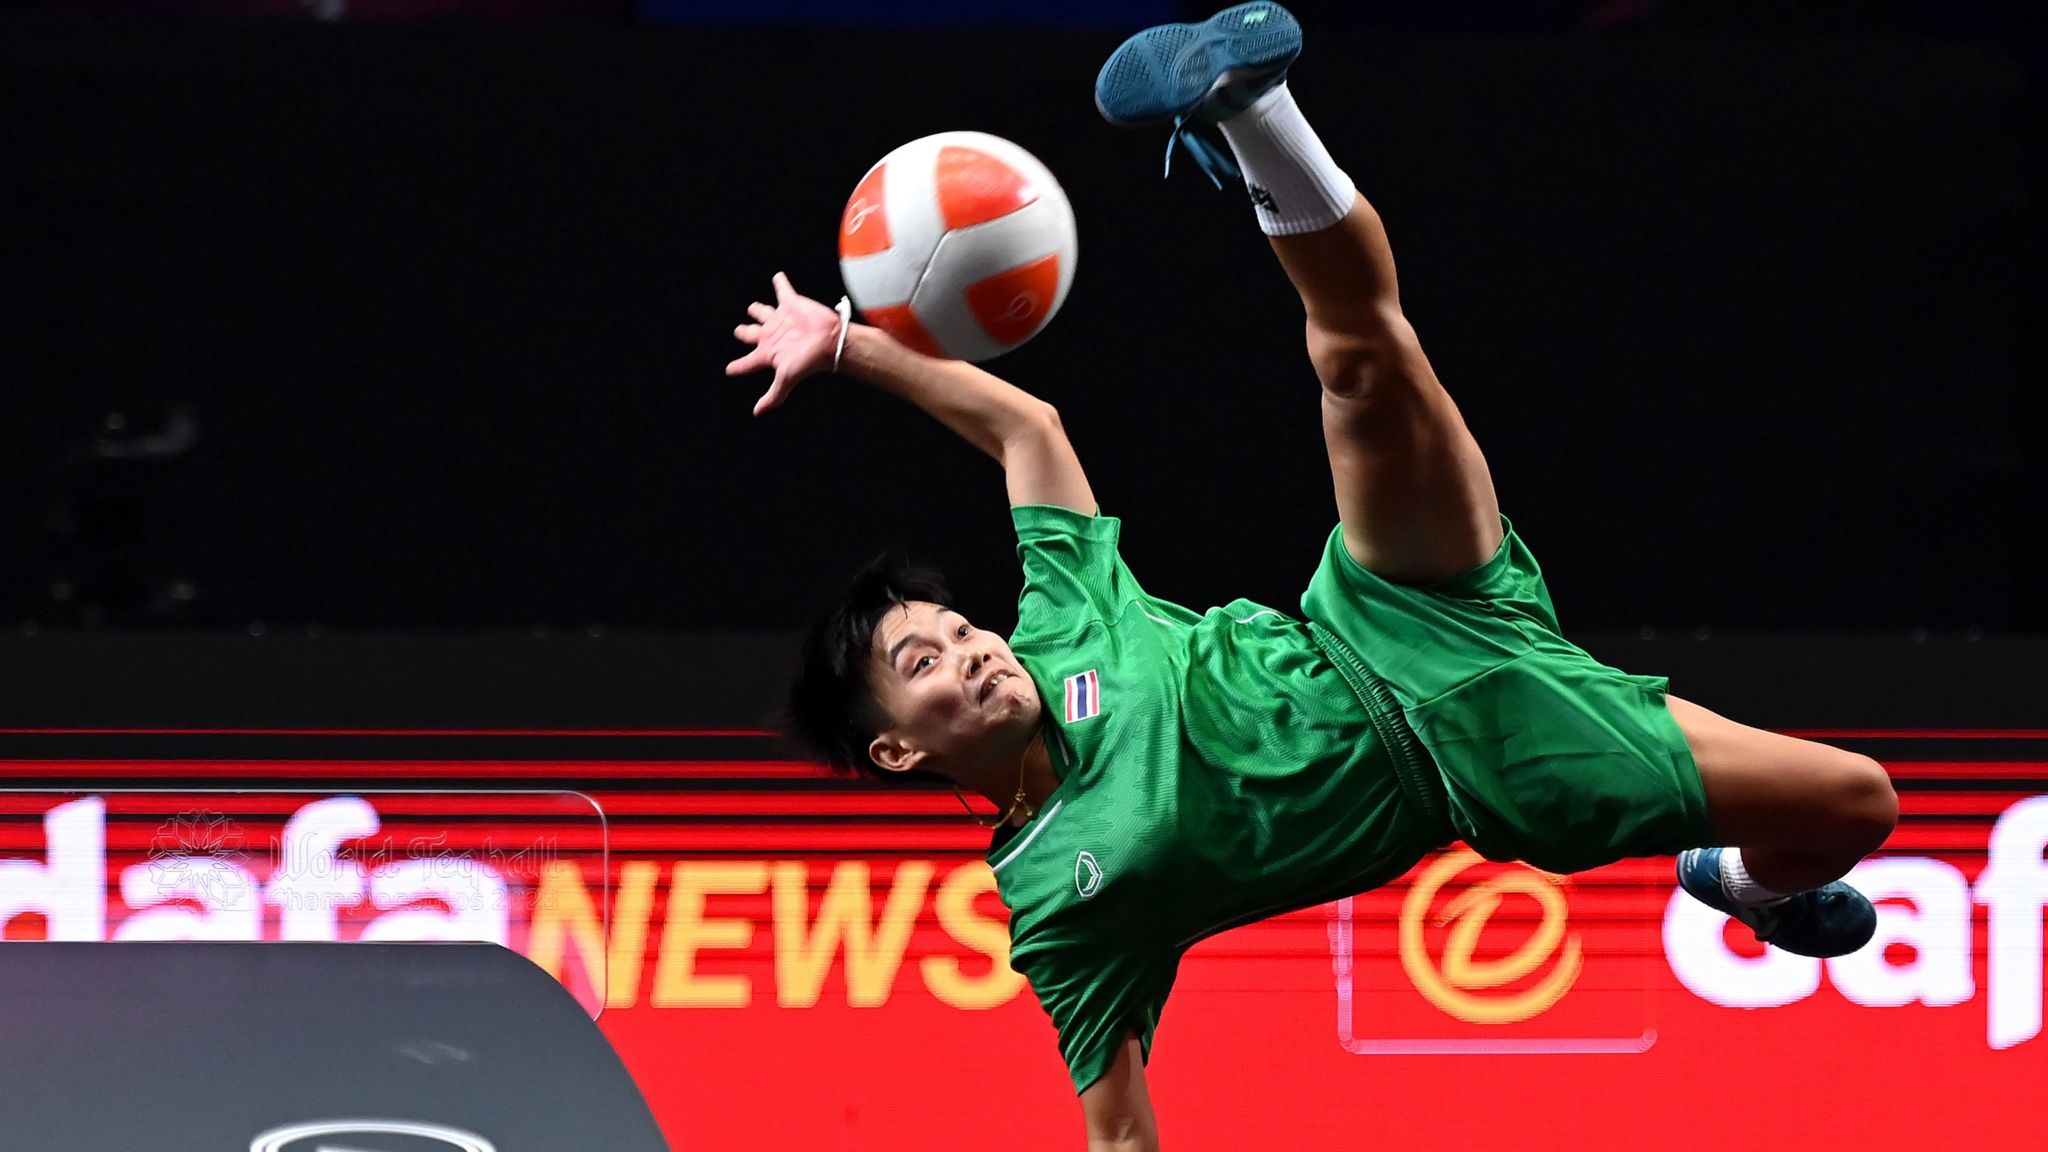 Jutatip Kuntatong executes an acrobatic overhead kick